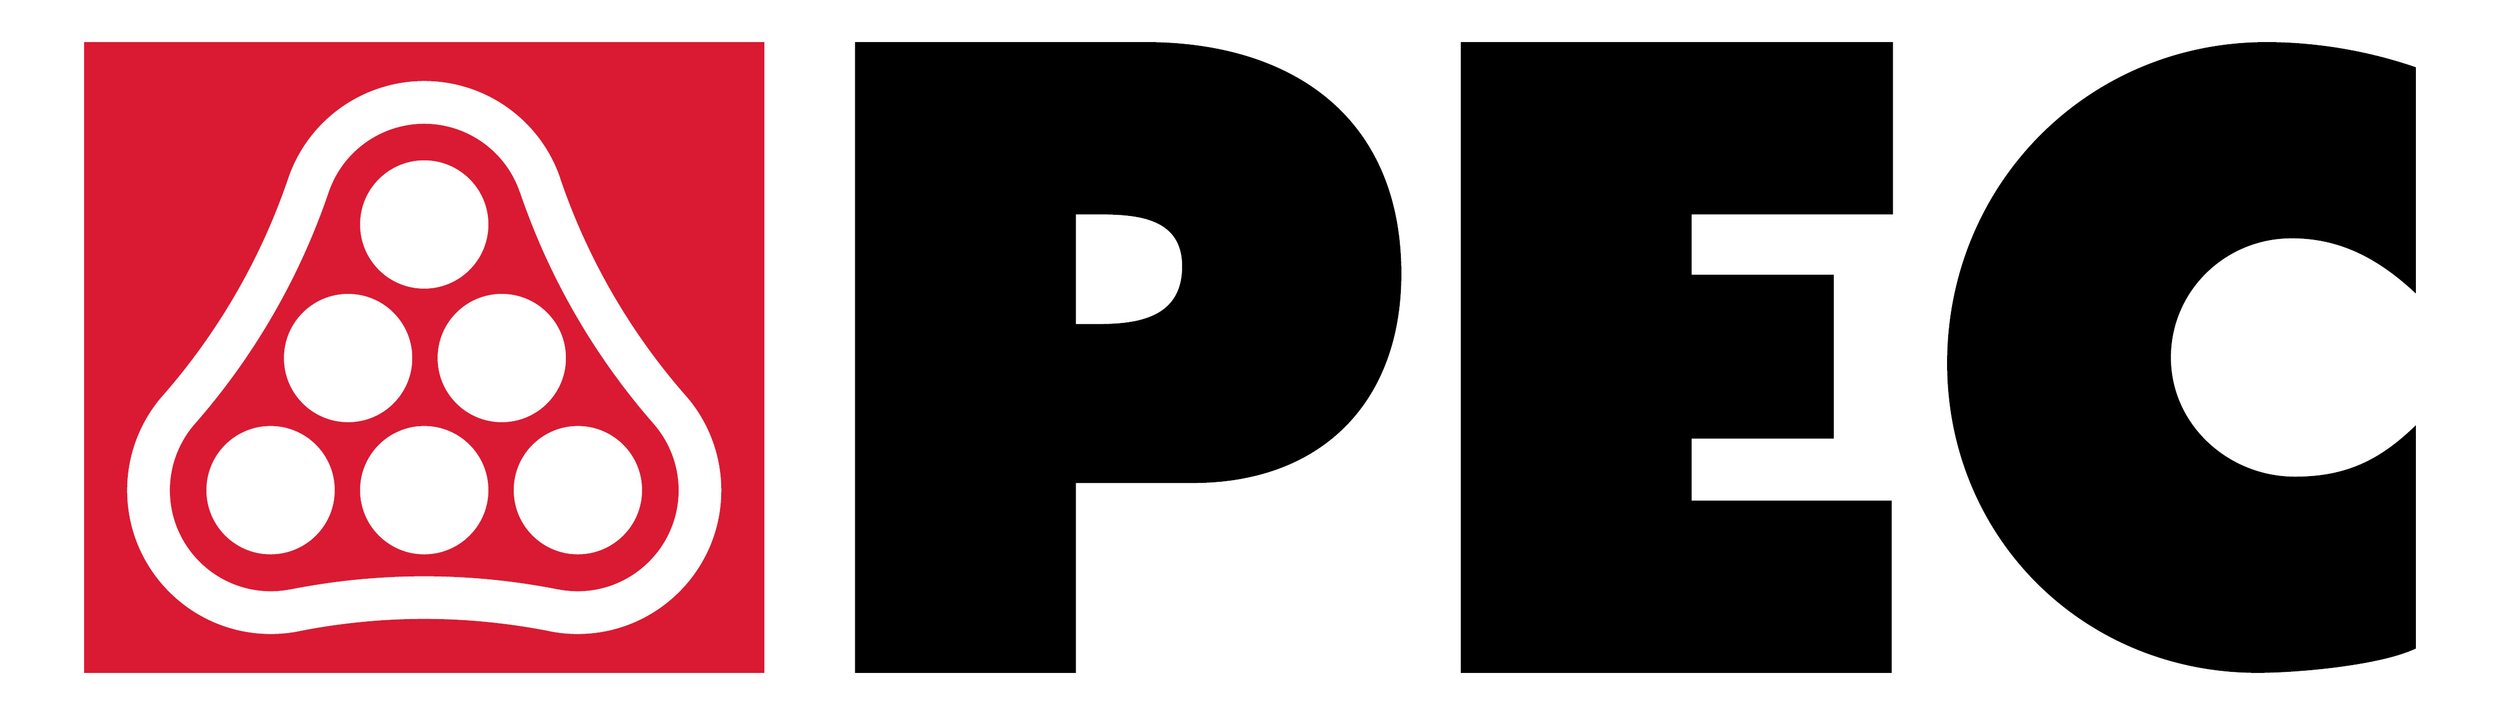 PEC Logo - Web.jpg